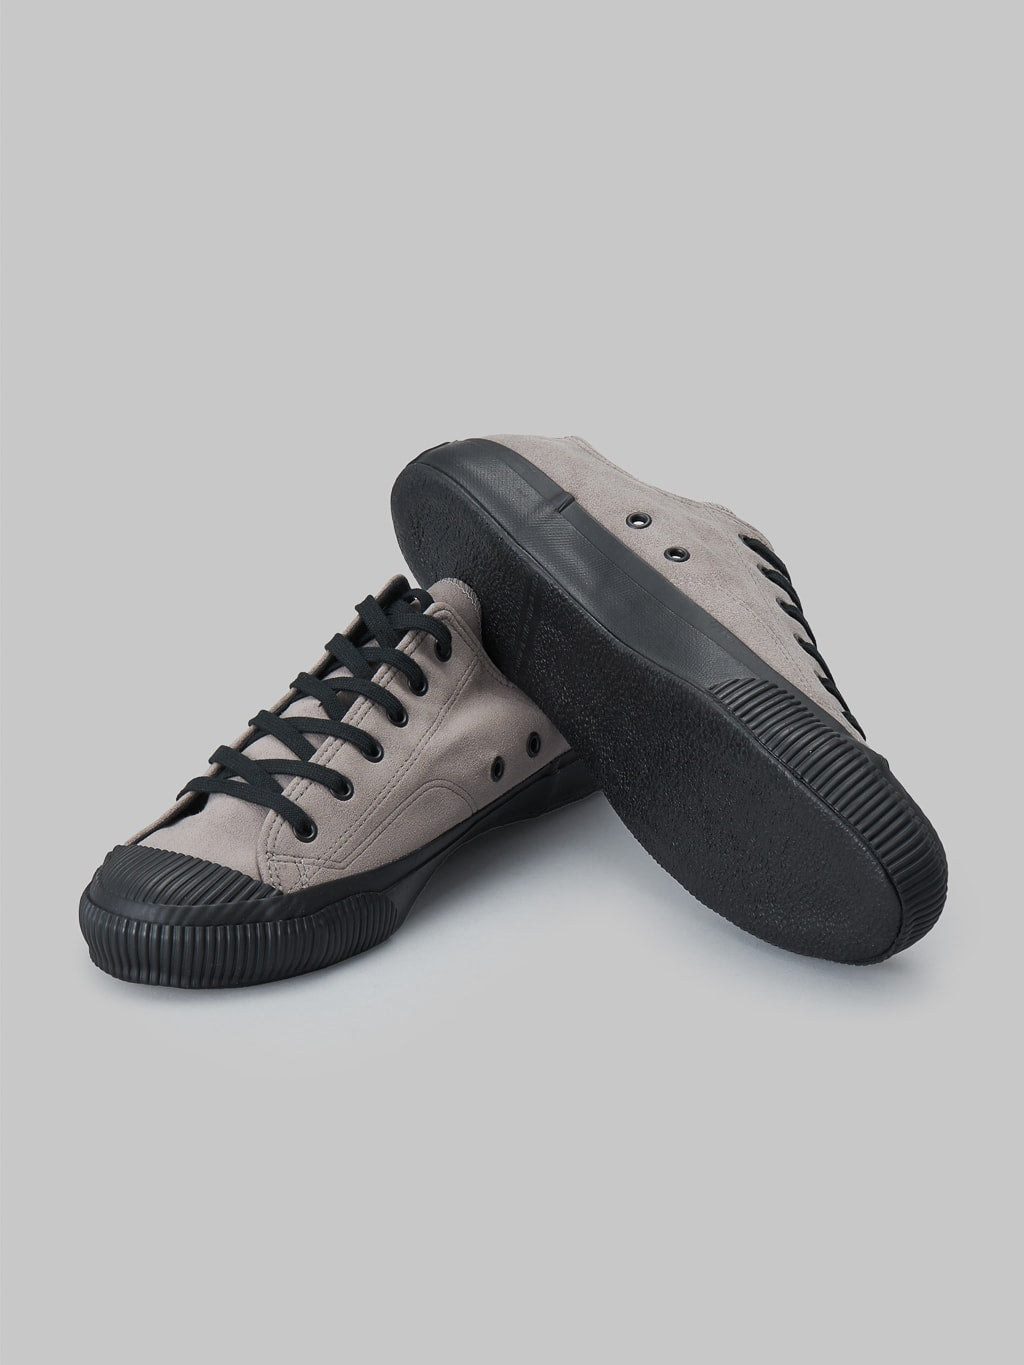 Pras shellcap low vegan sneakers suede grey black rubber sole